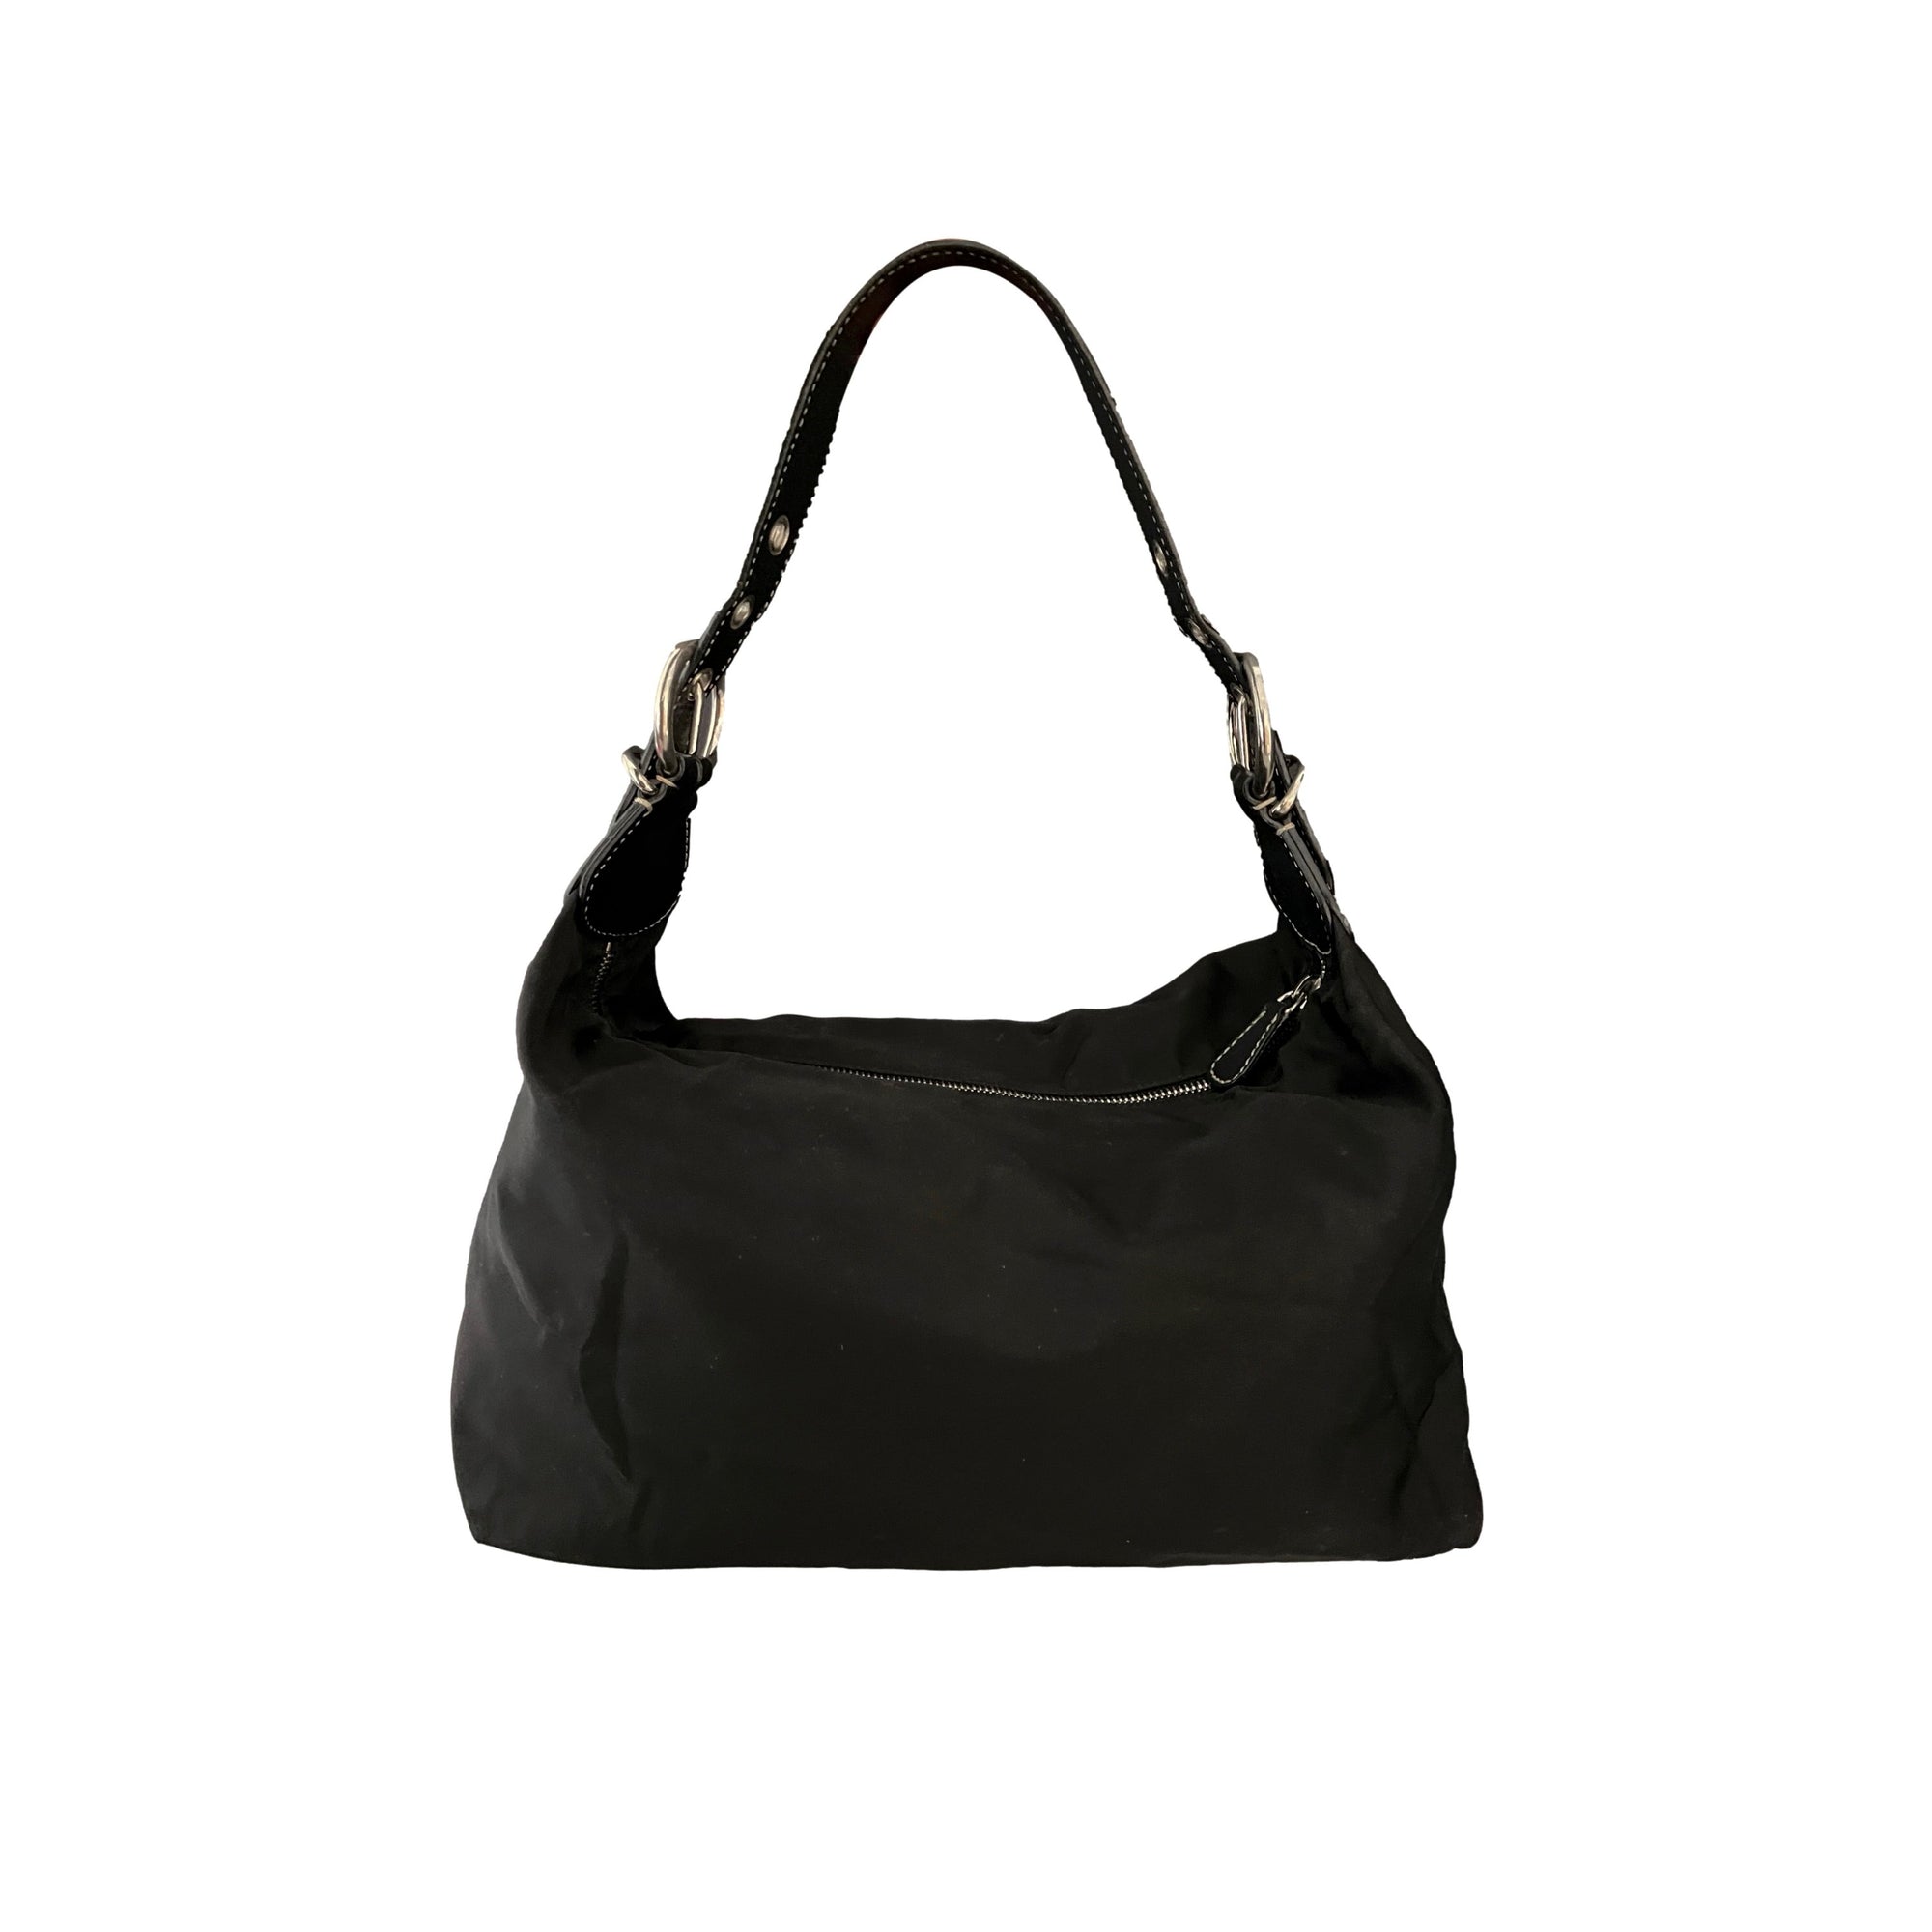 Prada Black Nylon Hobo Shoulder Bag - Handbags